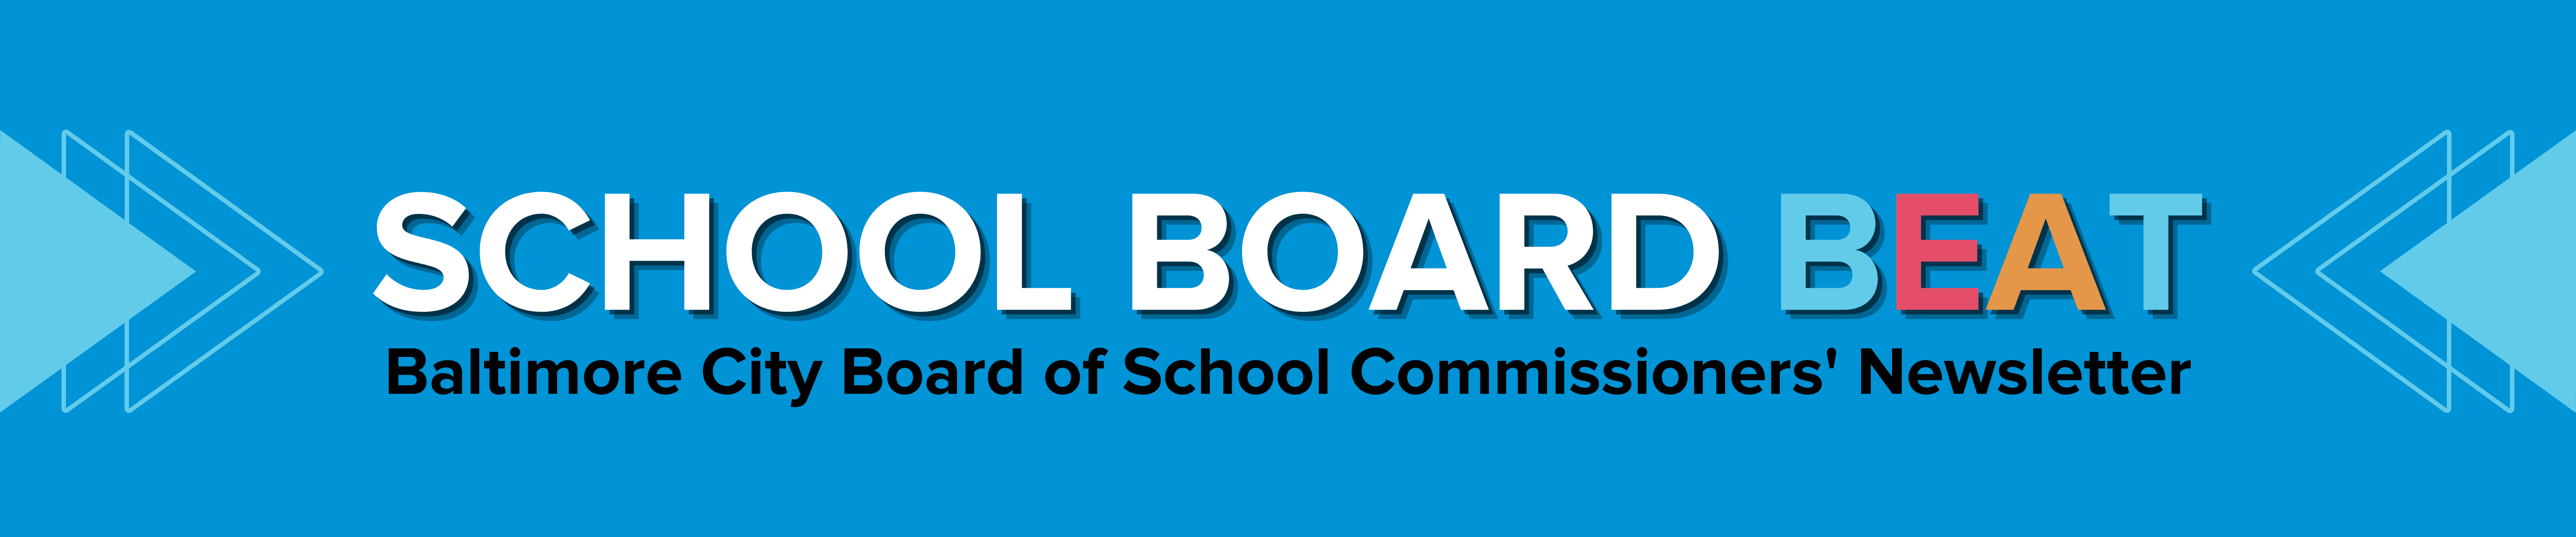 School Board Beat Newsletter banner